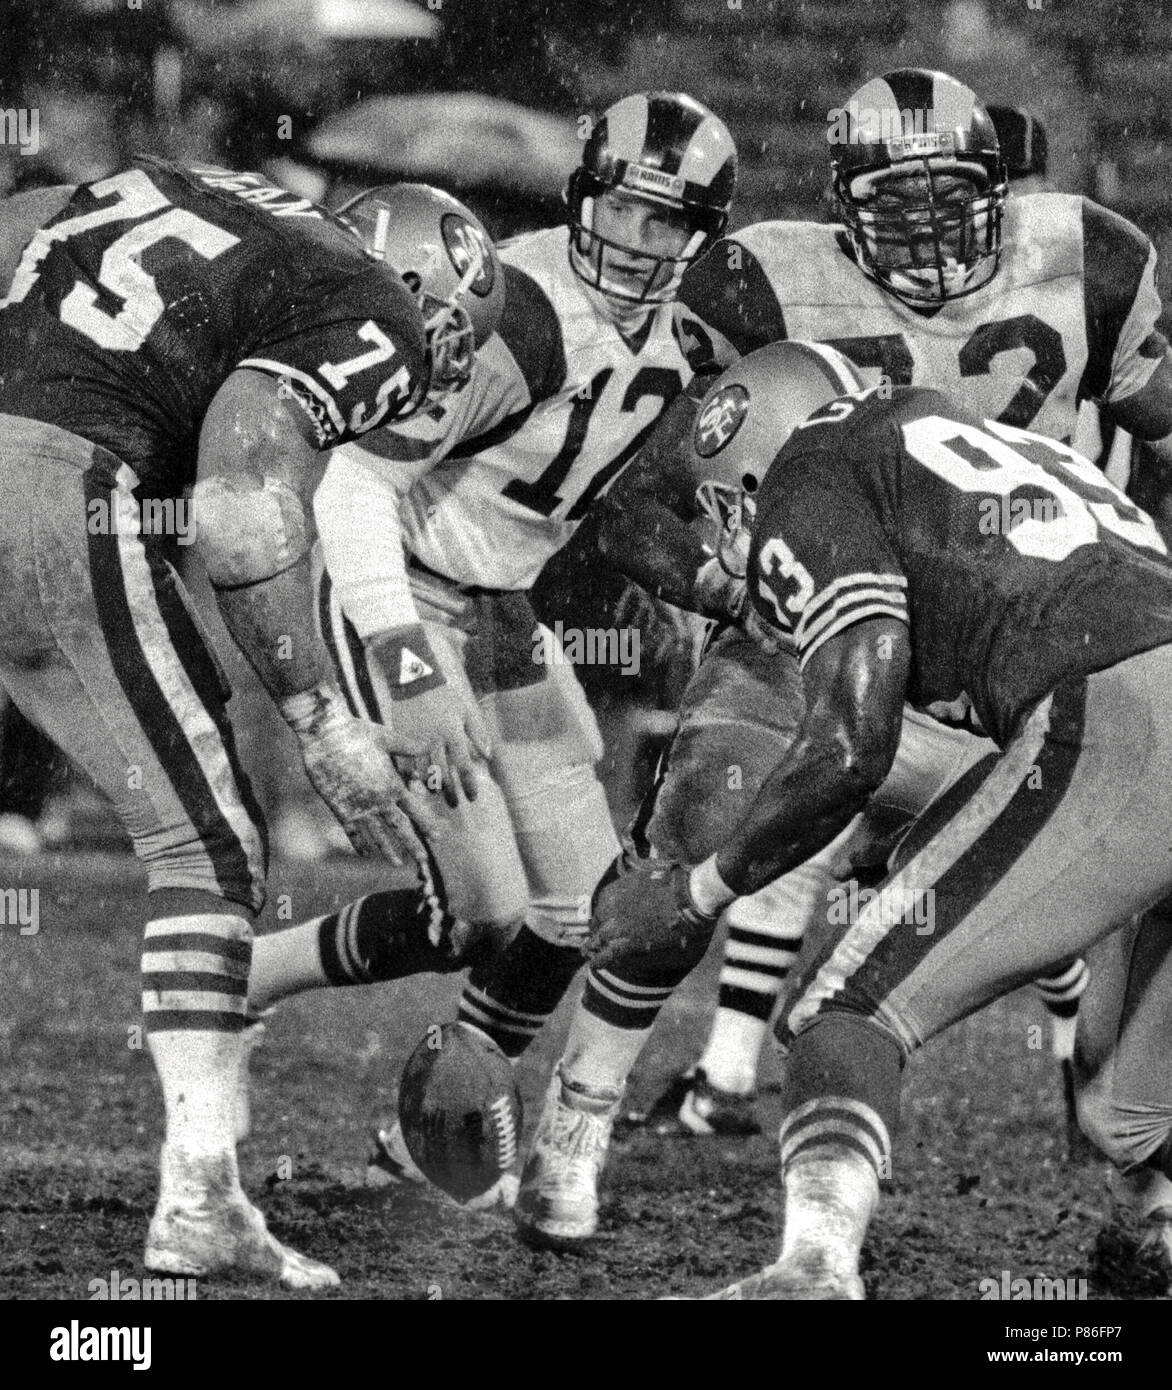 san-francisco-california-usa-27th-dec-1987-san-francisco-49ers-vs-los-angles-rams-at-candlestick-park-sunday-december-27-1987-49ers-beat-la-rams-48-0-san-francisco-defensive-end-kevin-fagan-75-and-defensive-tackle-clyde-grover-93-try-to-recover-los-angles-rams-quarterback-hugh-millen-12-ball-credit-al-golubzuma-wirealamy-live-news-P86FP7.jpg